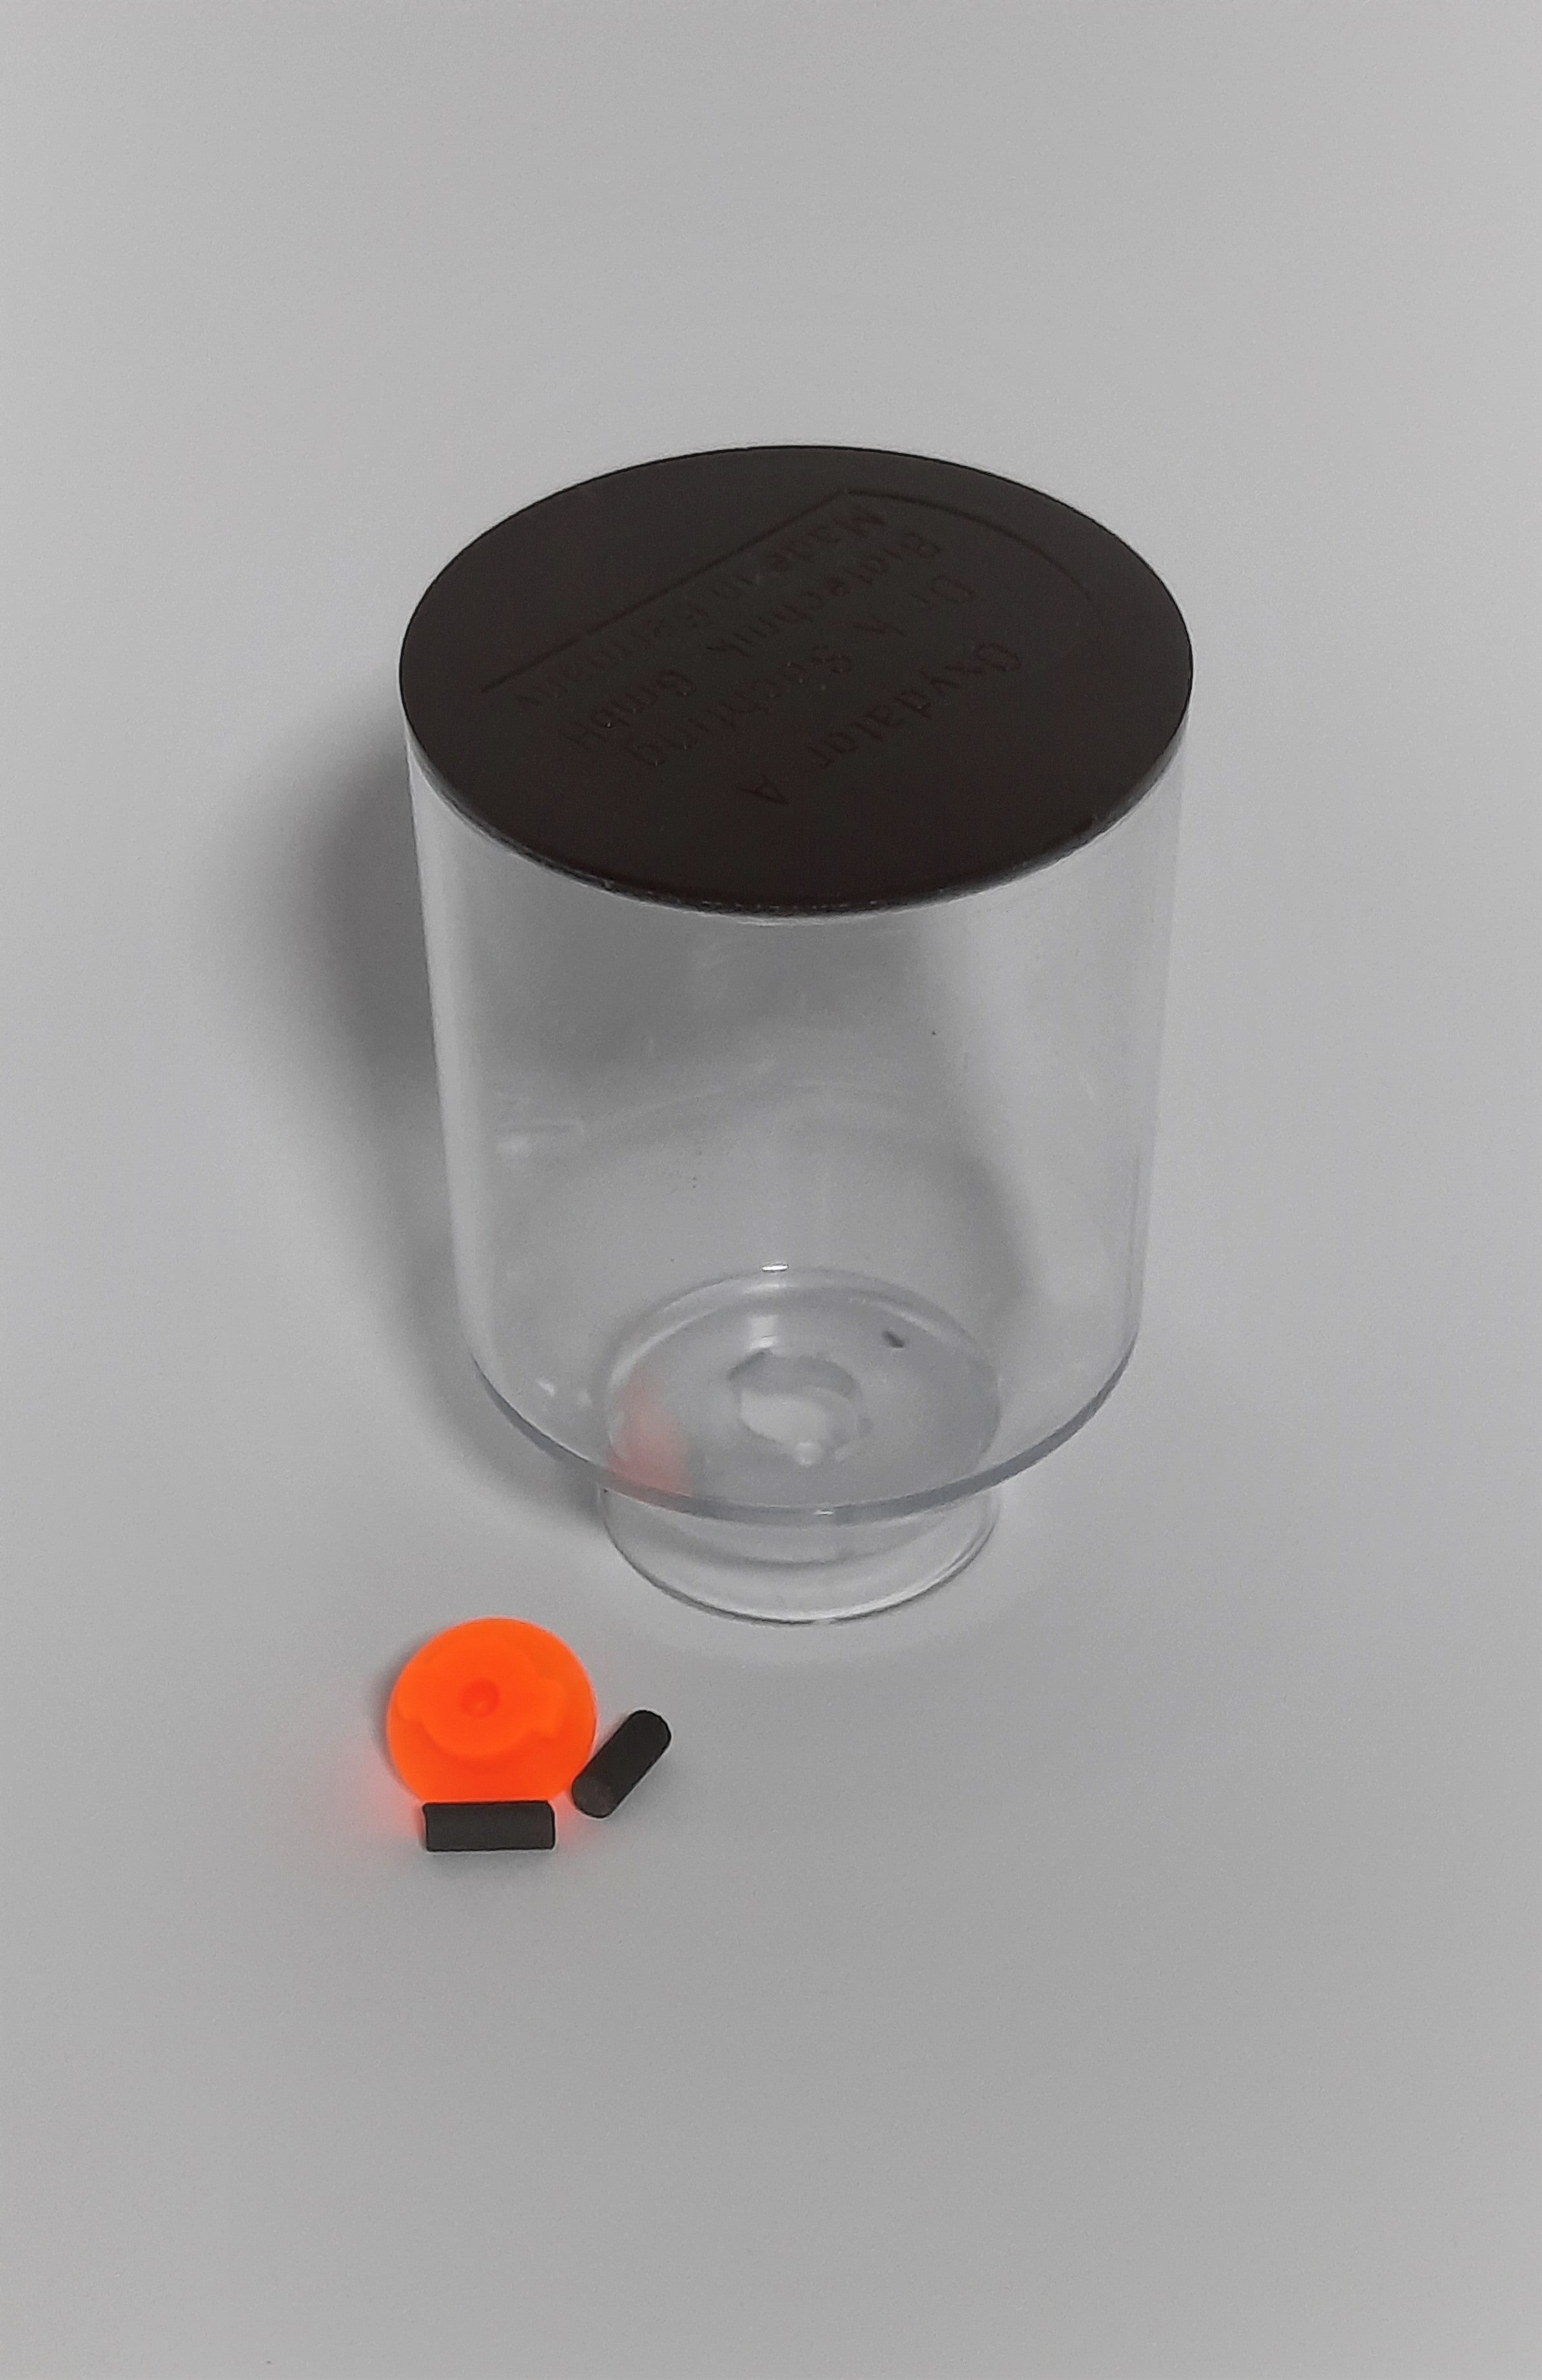 Söchting Oxydator A Acrylglas-Behälter